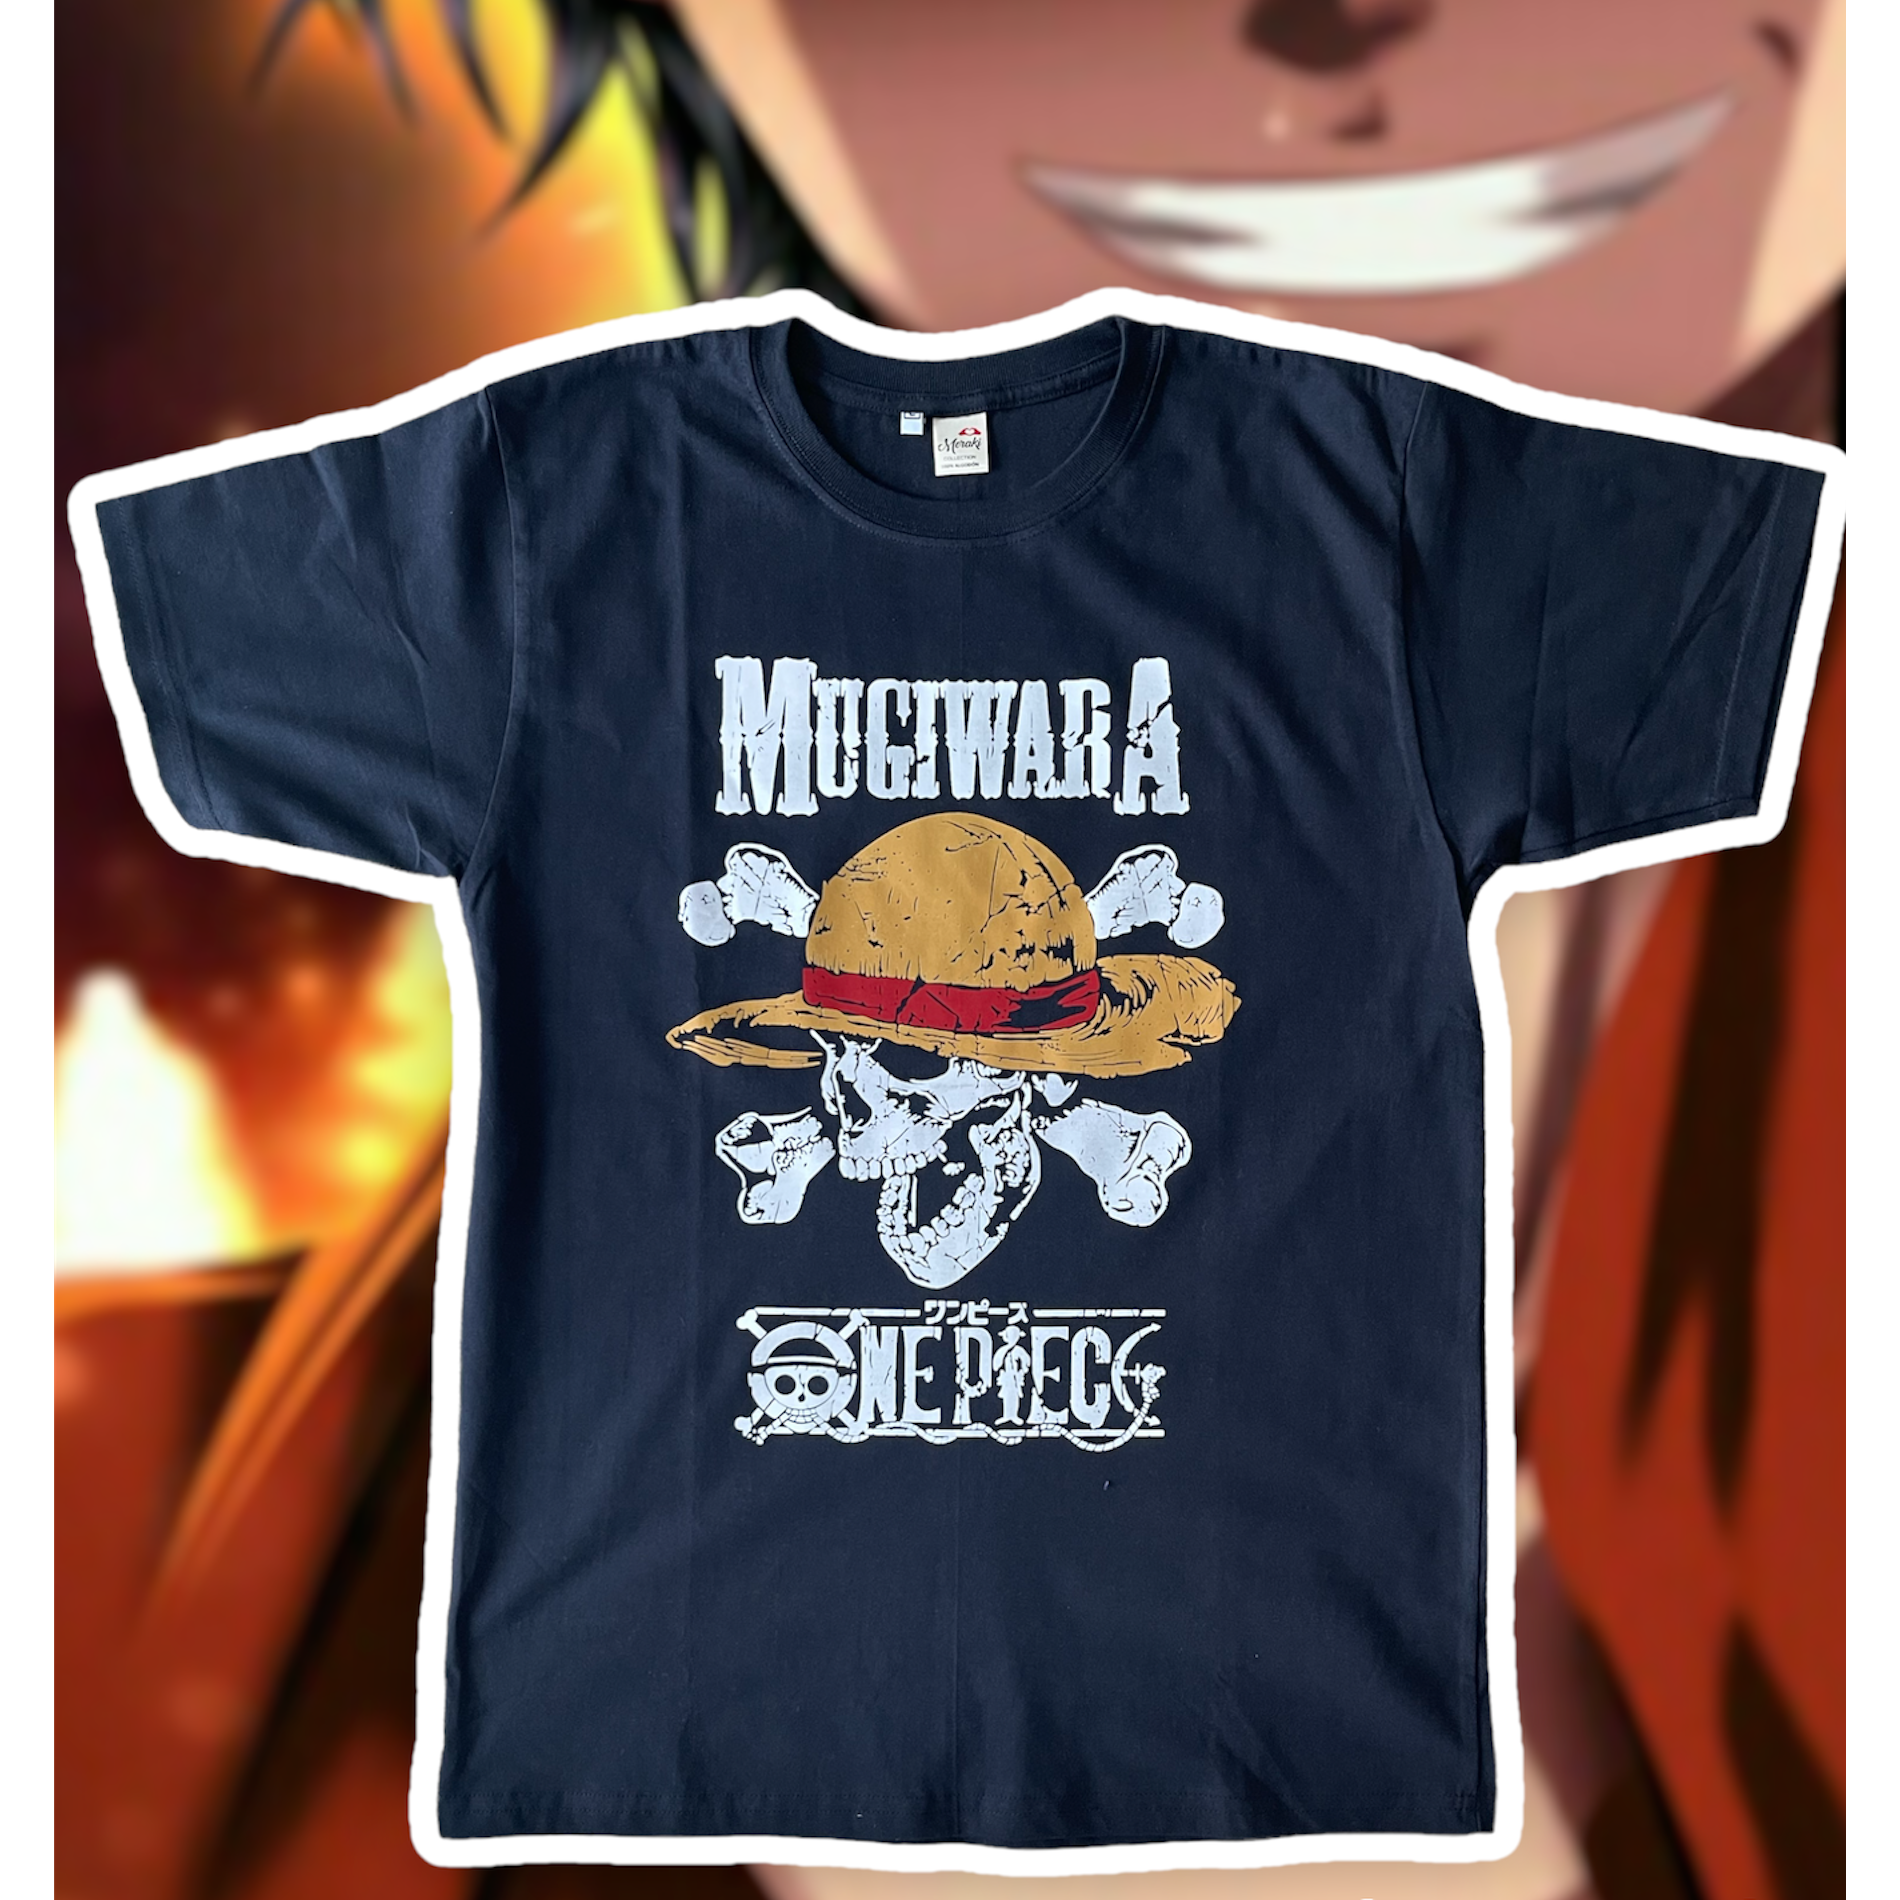 T-shirt modelo One Piece talla L